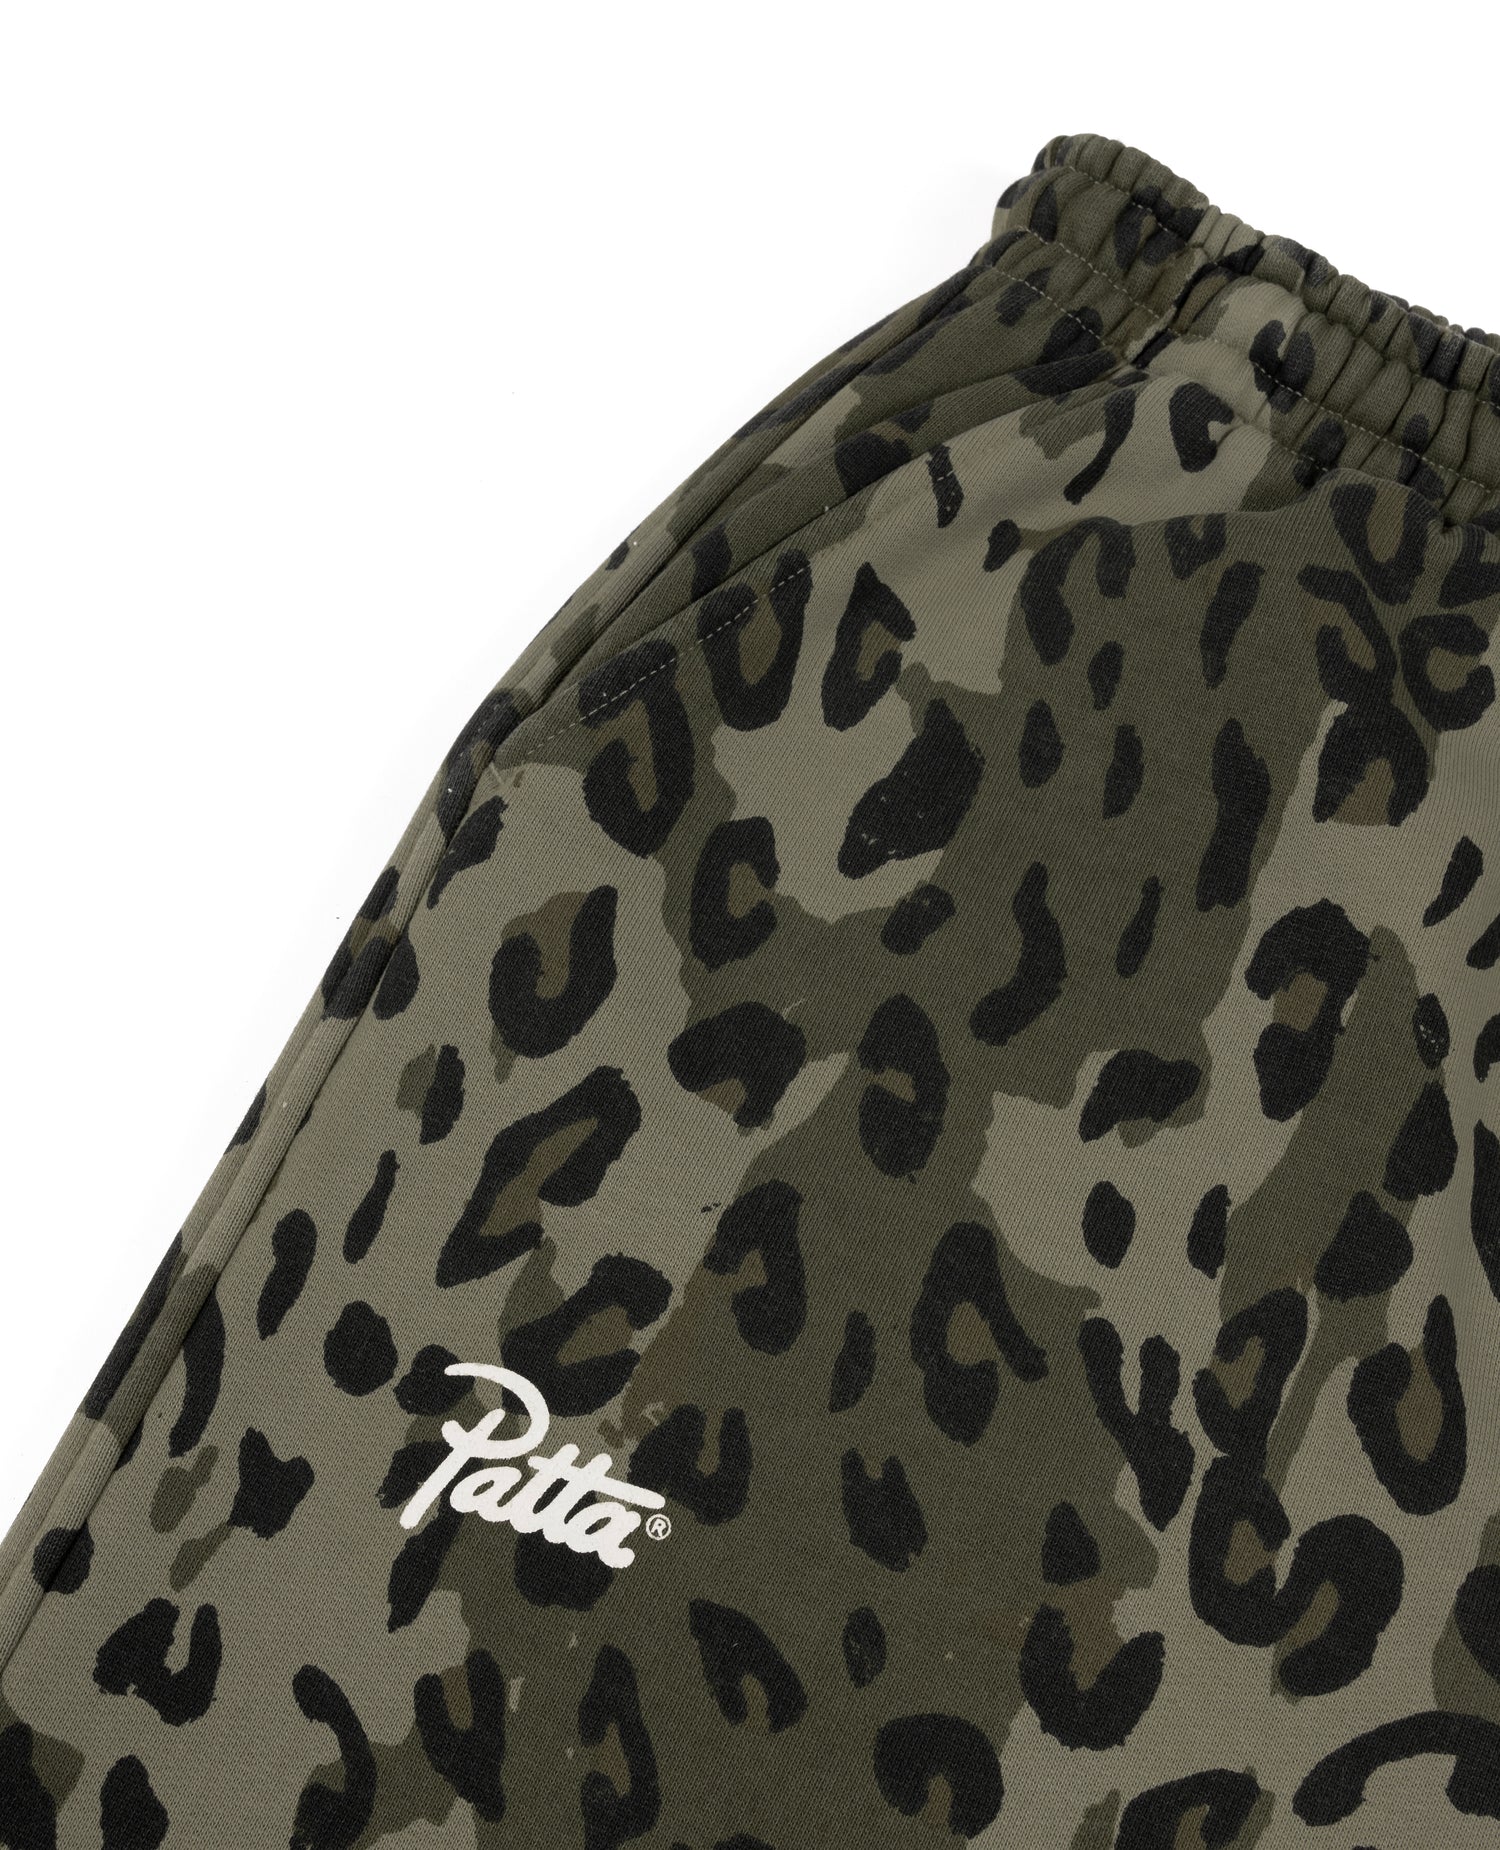 Patta Femme Leopard Jogging Pants (Dusty Olive)